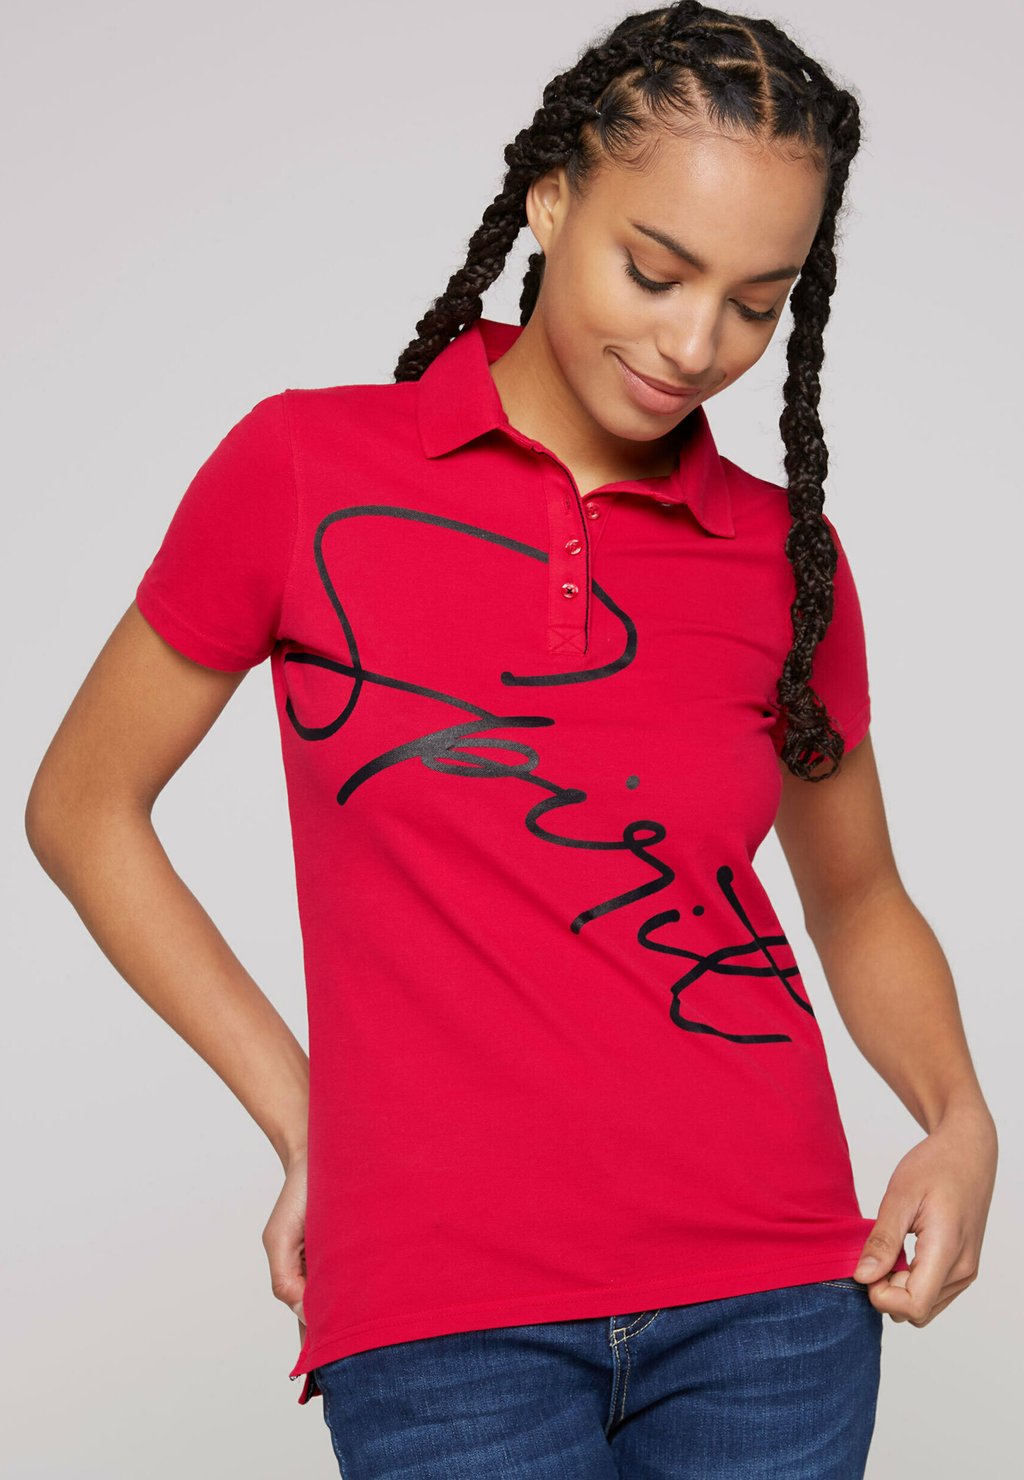 Рубашка-поло MIT LABEL Soccx, цвет clear red рубашка с длинными рукавами strukturiertes rundhals mit wording soccx цвет clear red